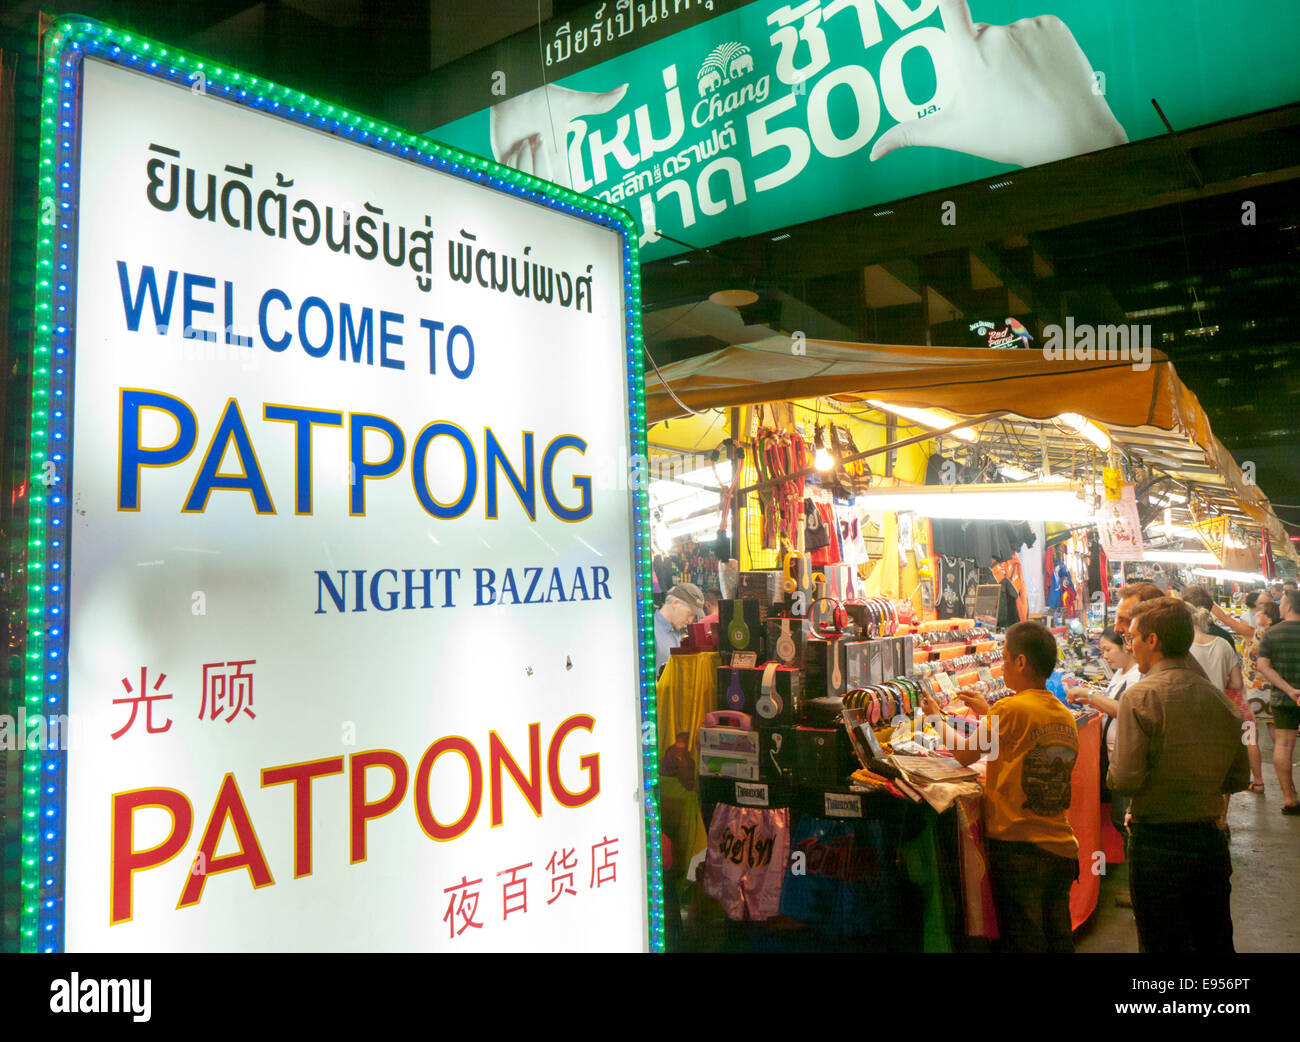 Patpong night bazaar market in Bangkok Thailand Stock Photo